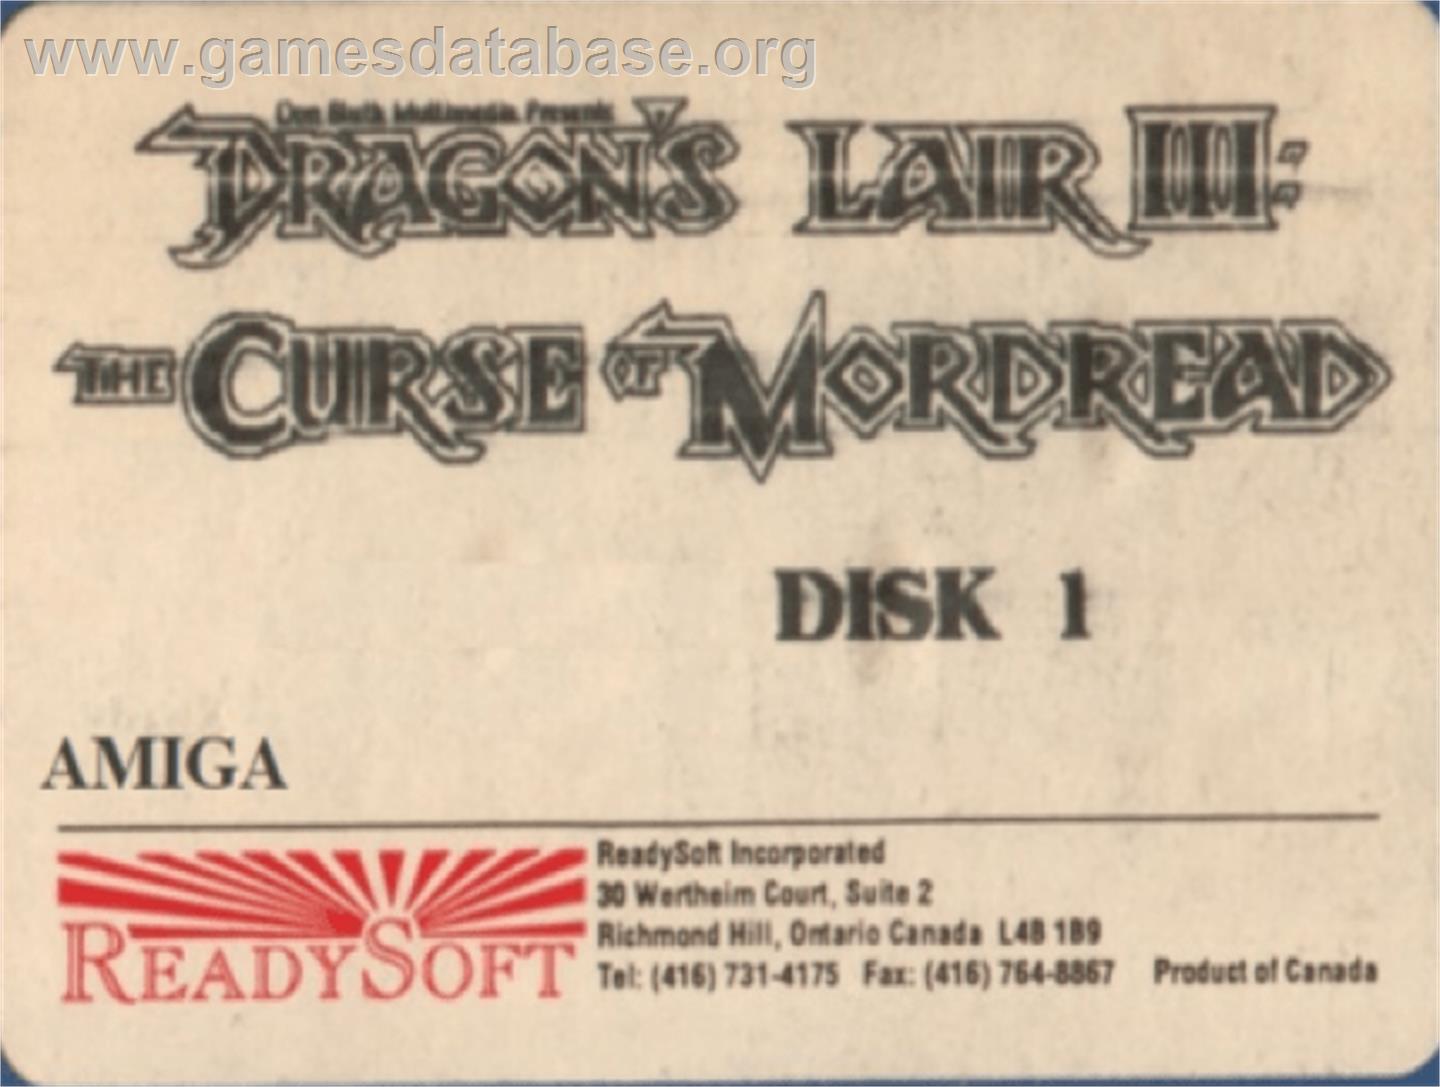 Dragon's Lair 3: The Curse of Mordread - Commodore Amiga - Artwork - Cartridge Top